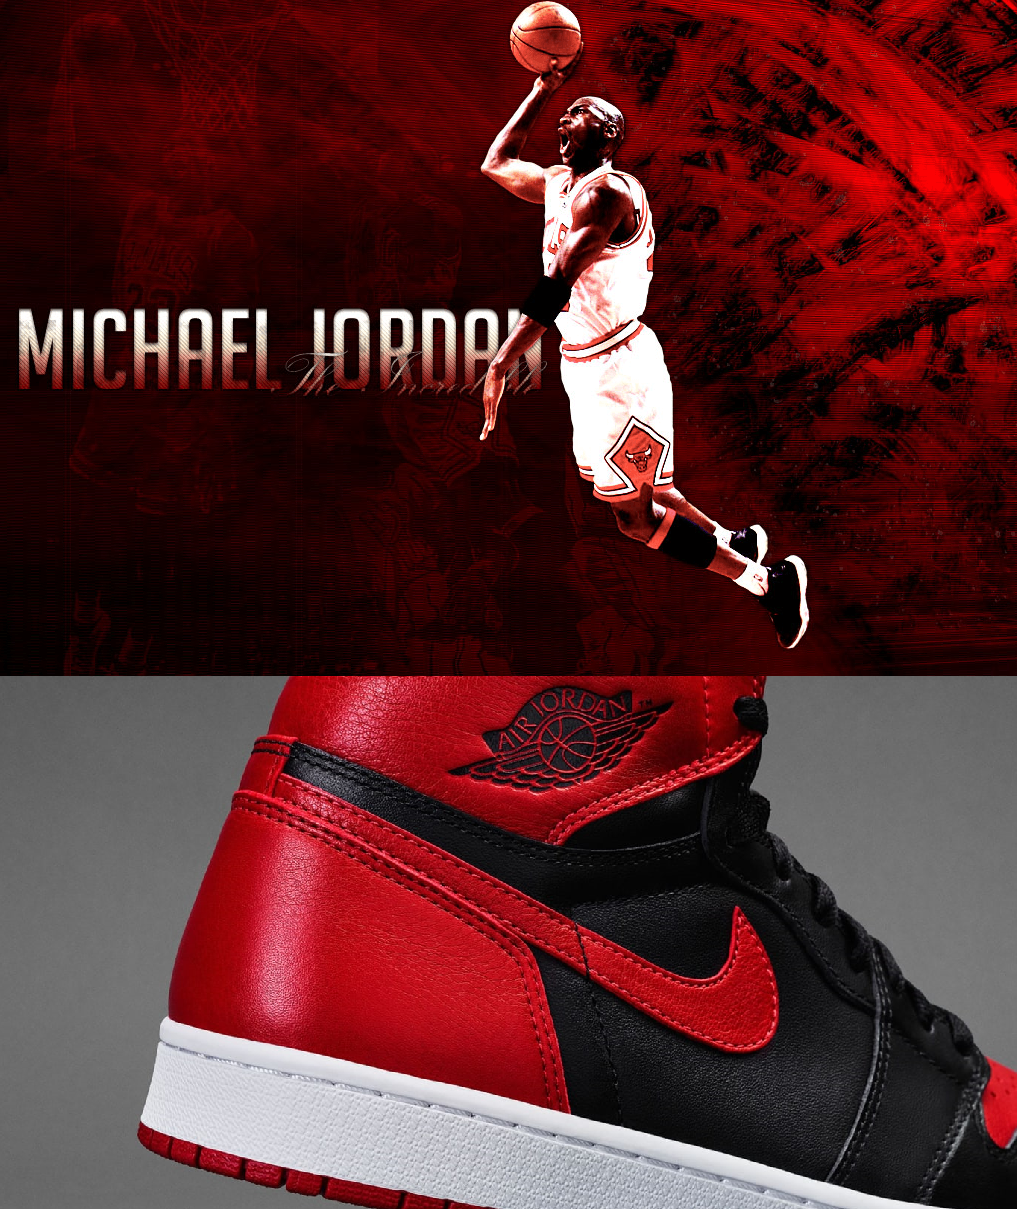 I Want To Dress Like '90s Michael Jordan - Grazia